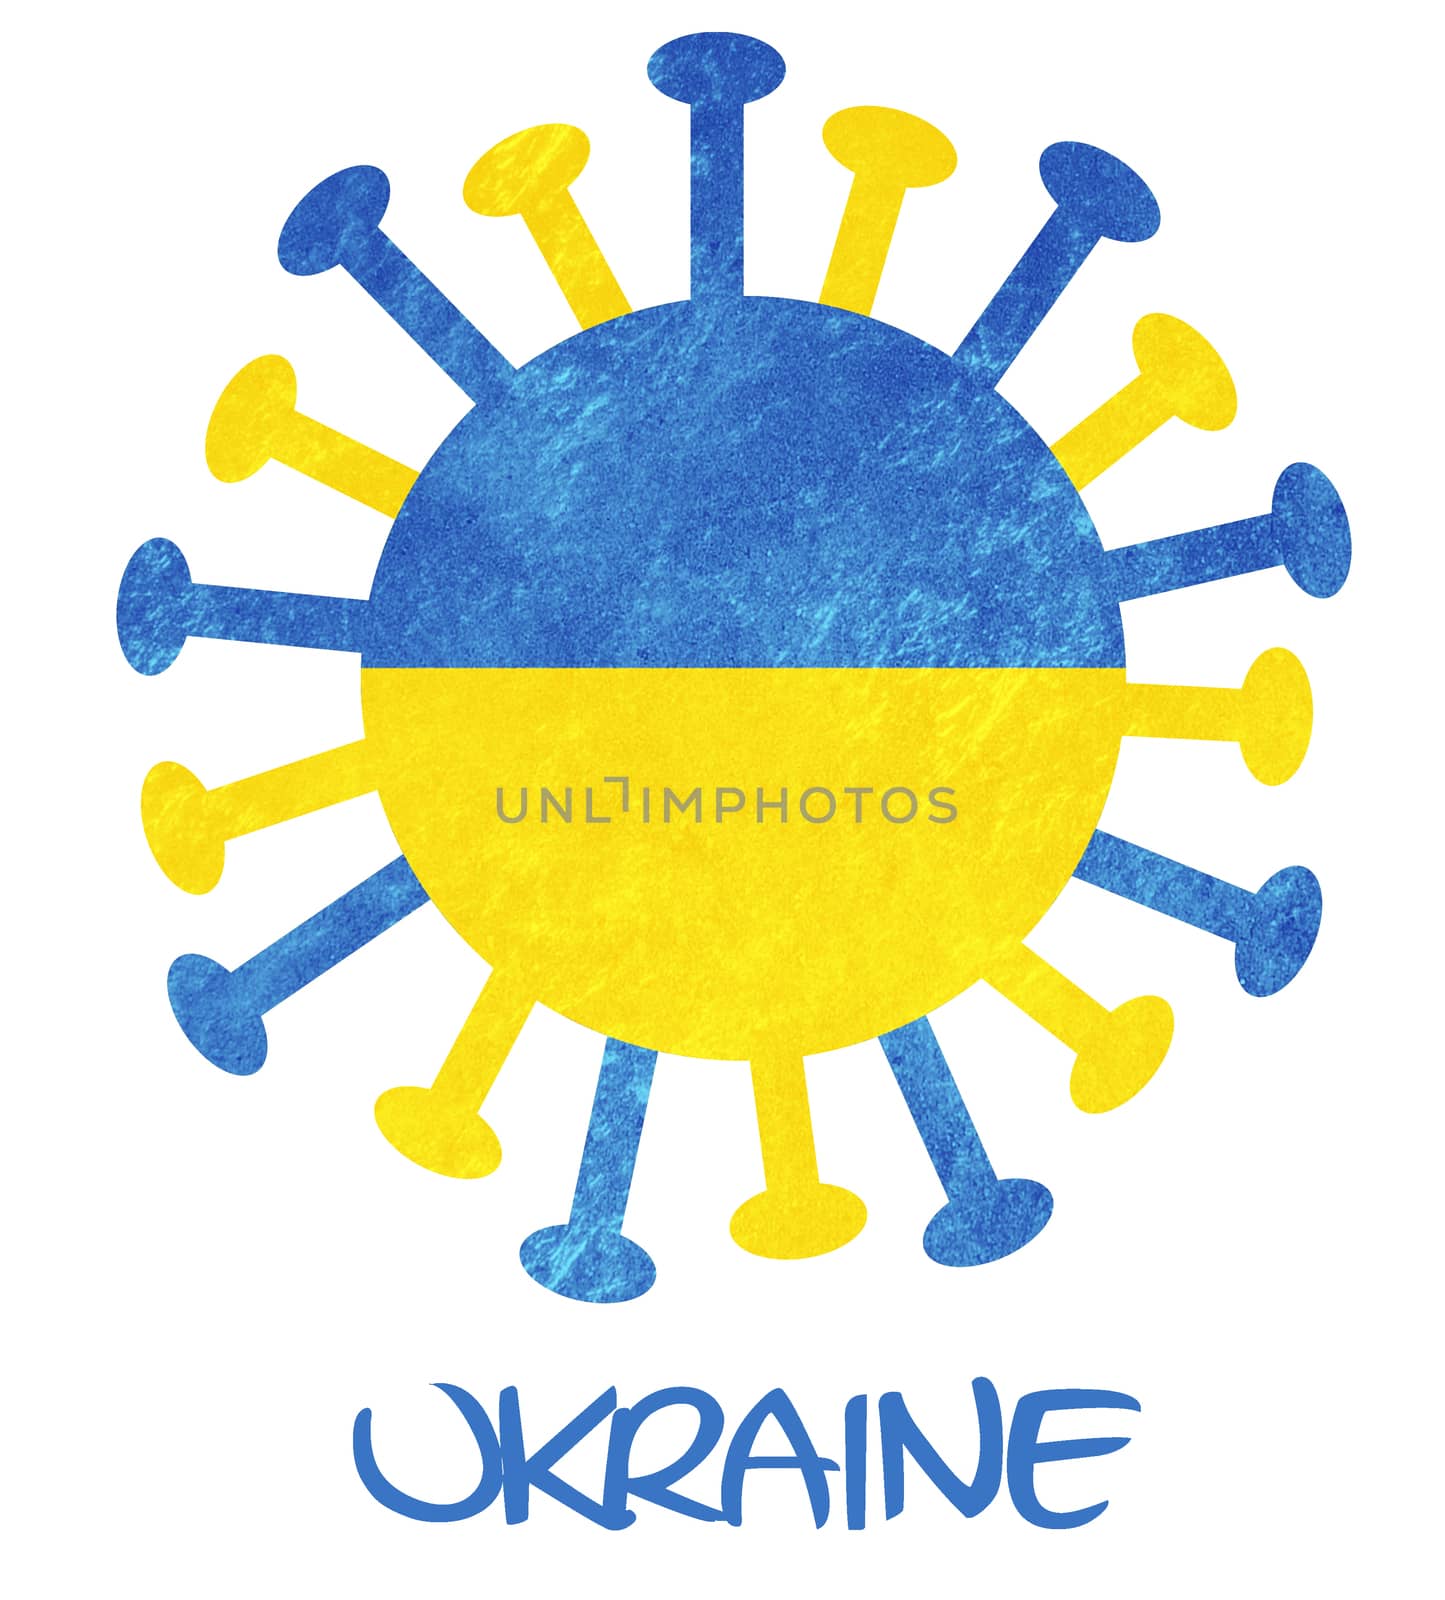 The national flag of Ukraine with corona virus or bacteria - Isolated on white